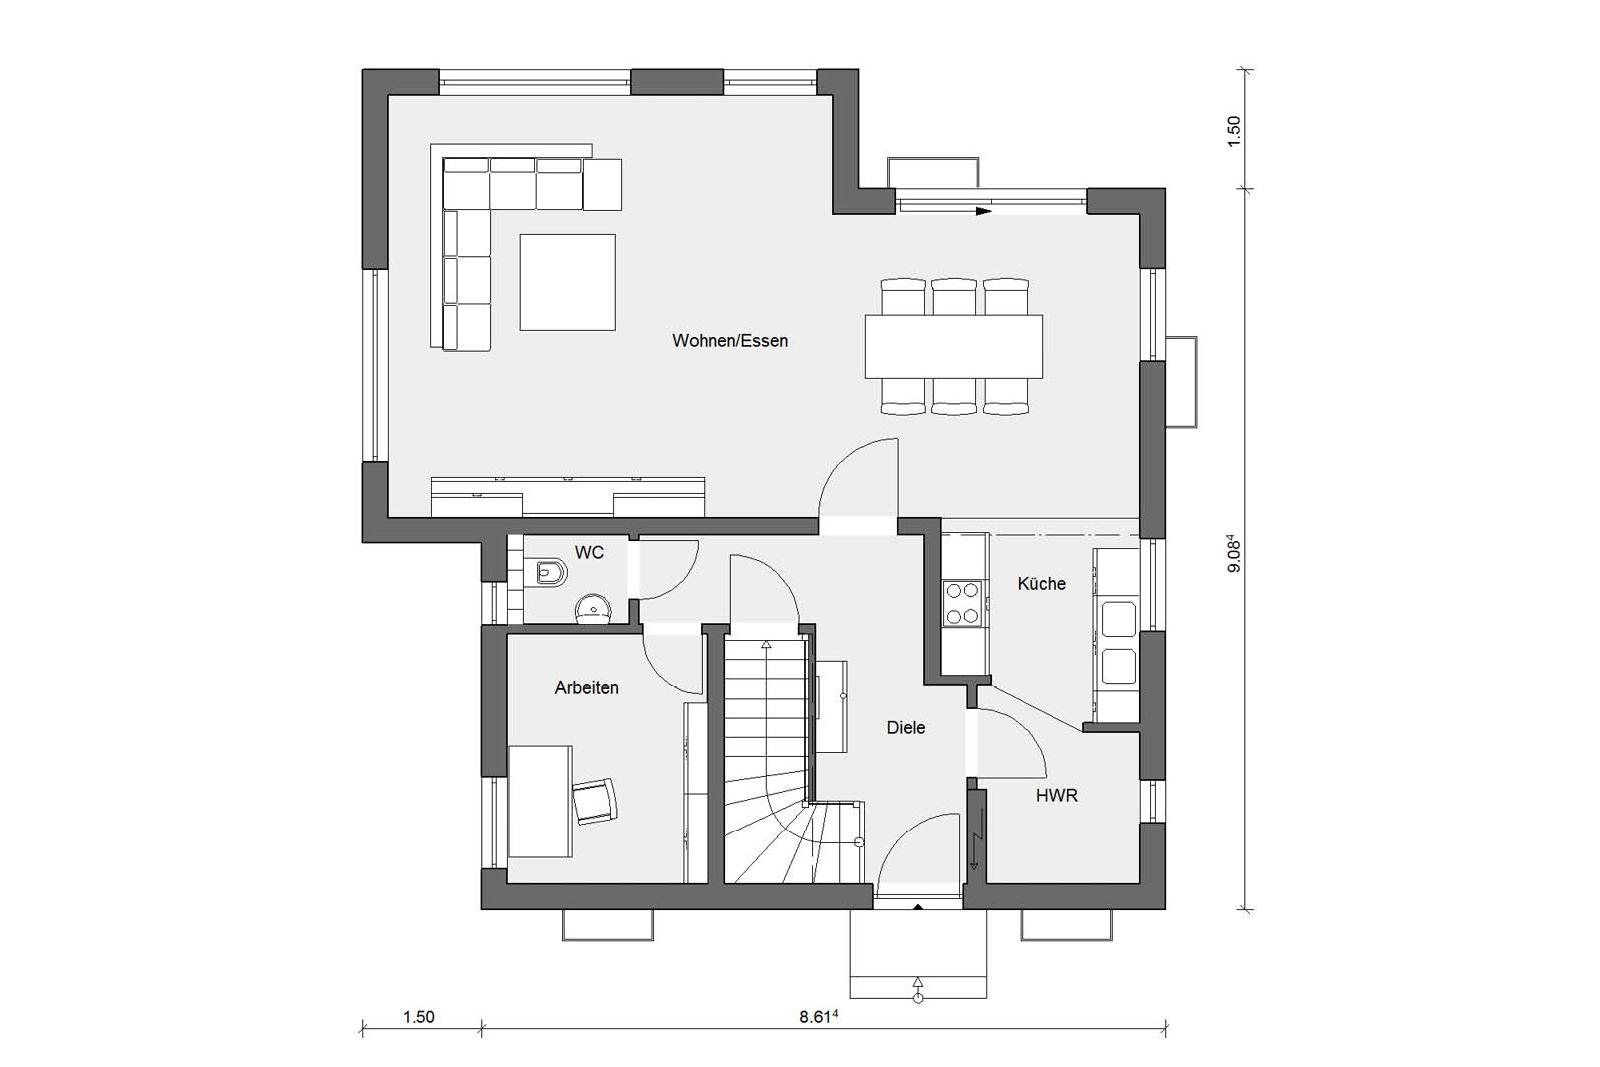 Ground floor plan E 20-142.3 Bauhaus style prefabricated house